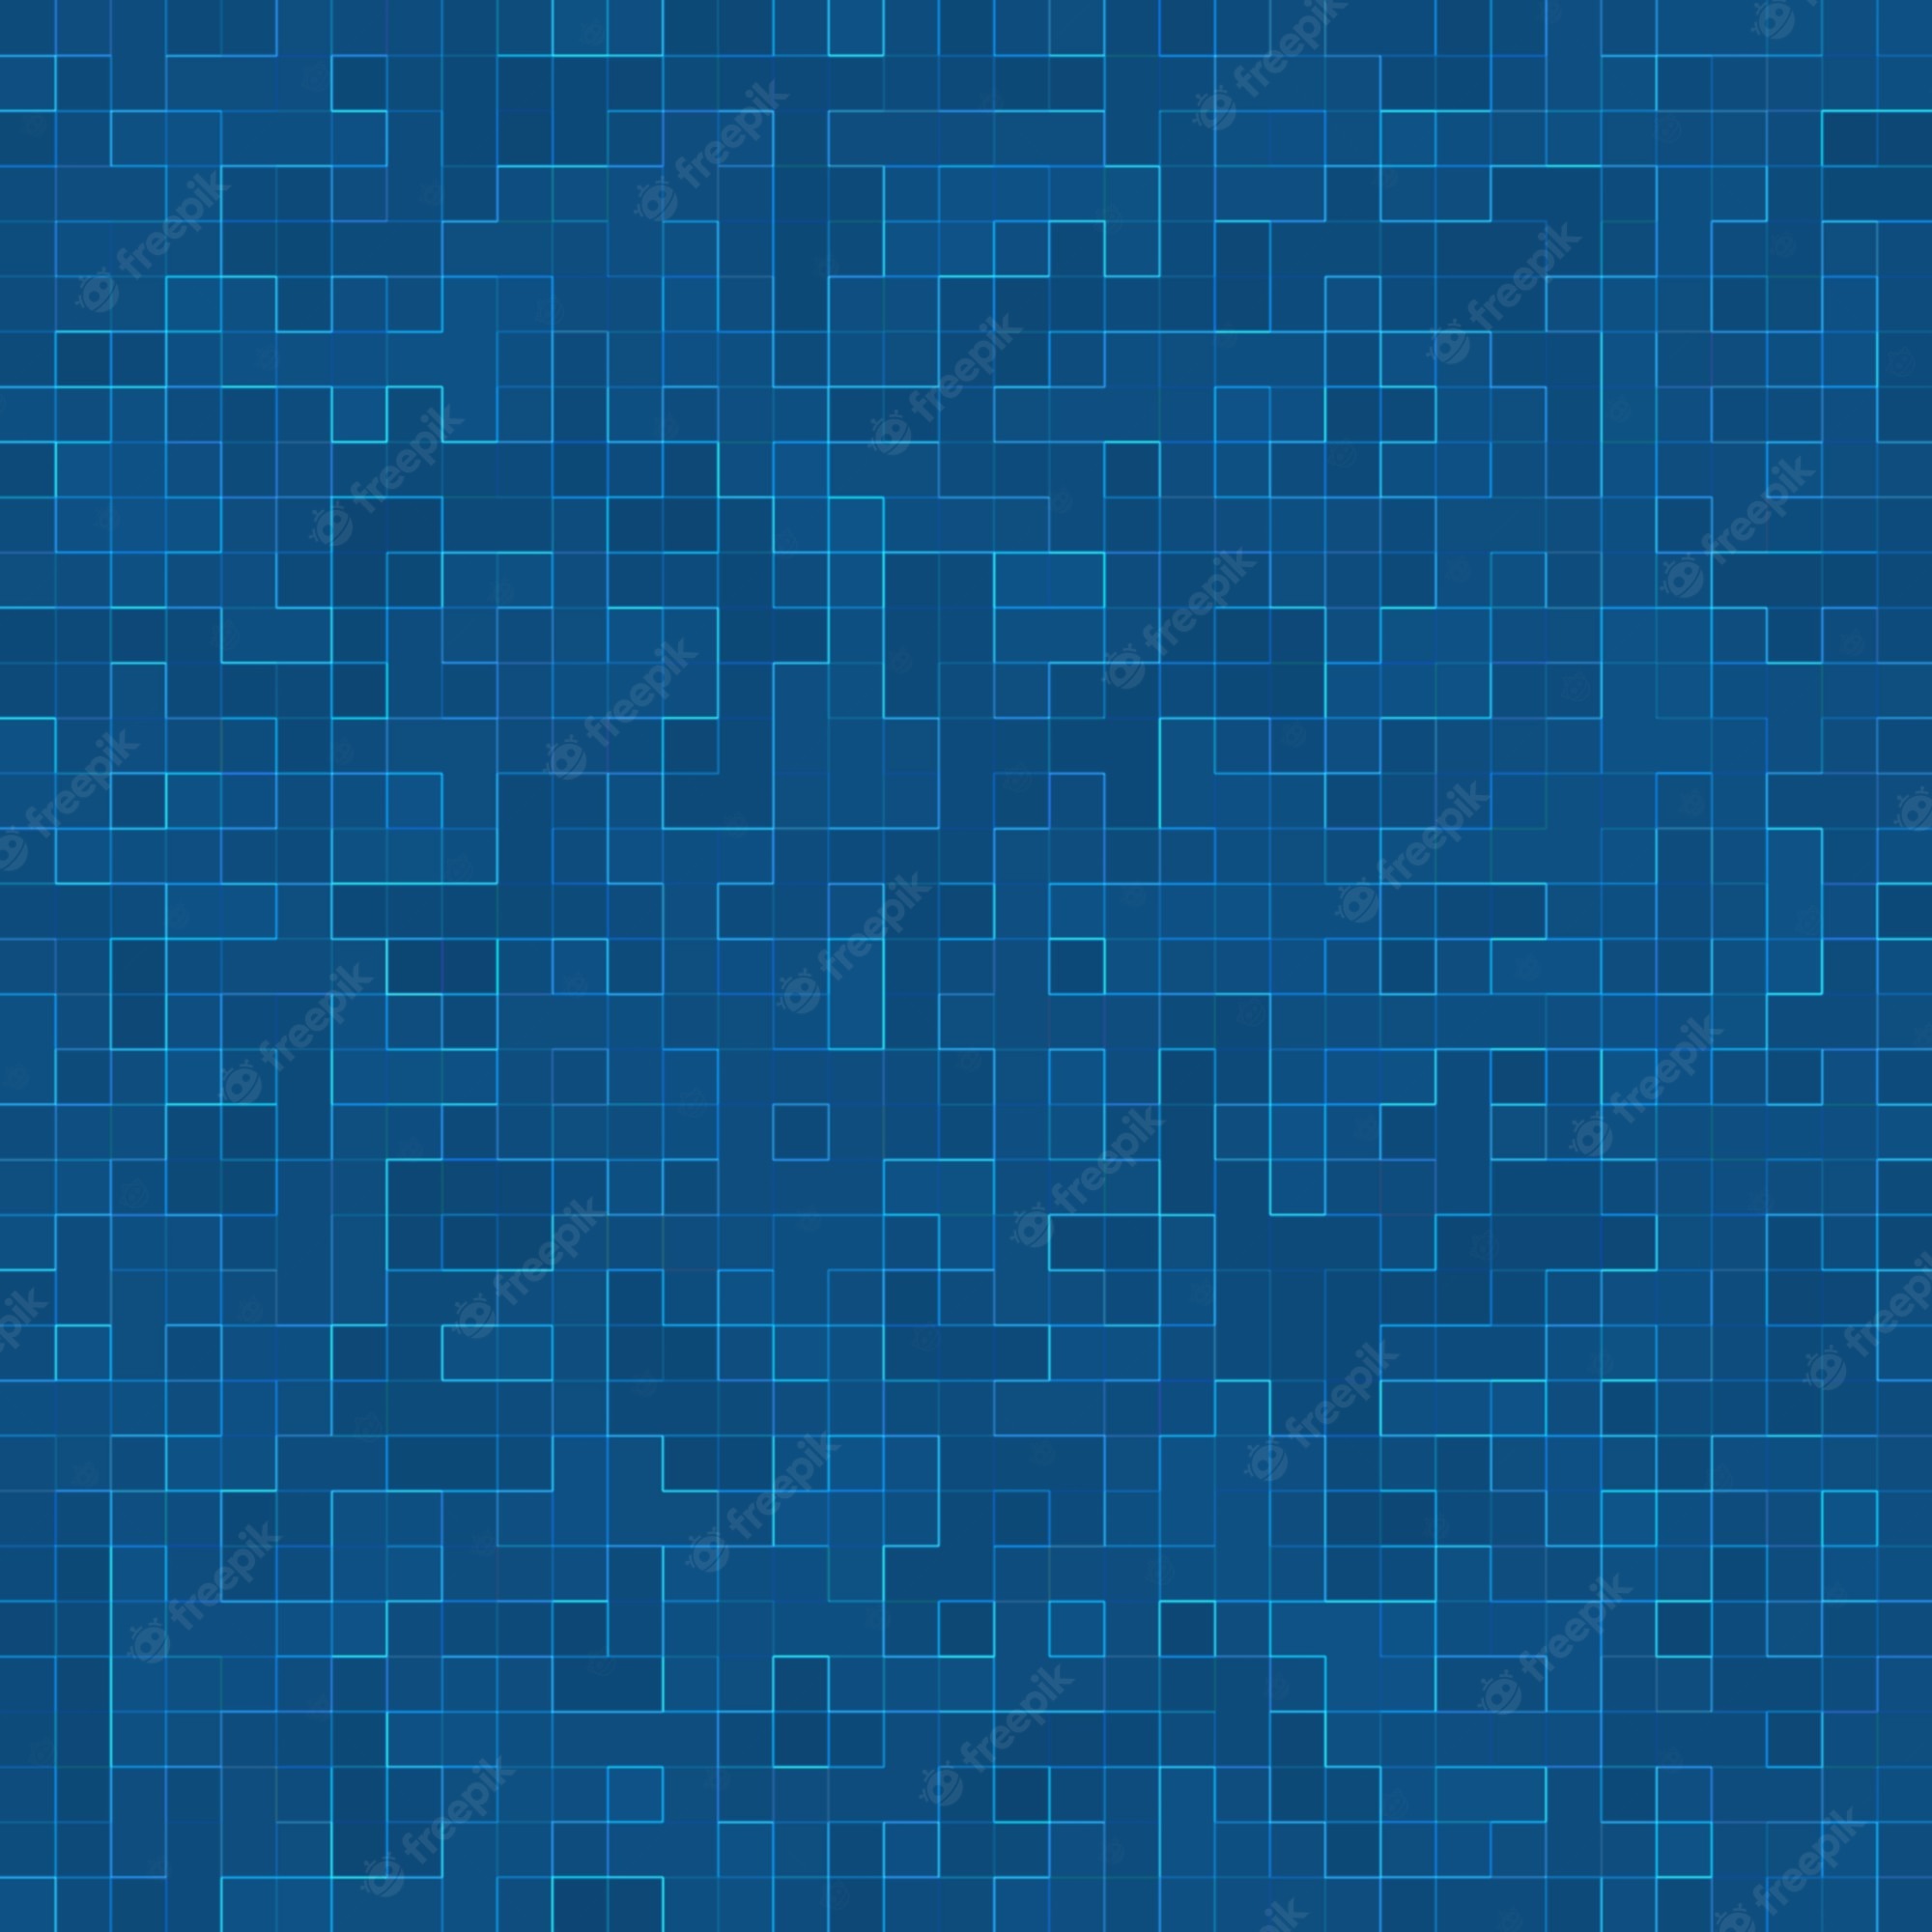 Blue tile images